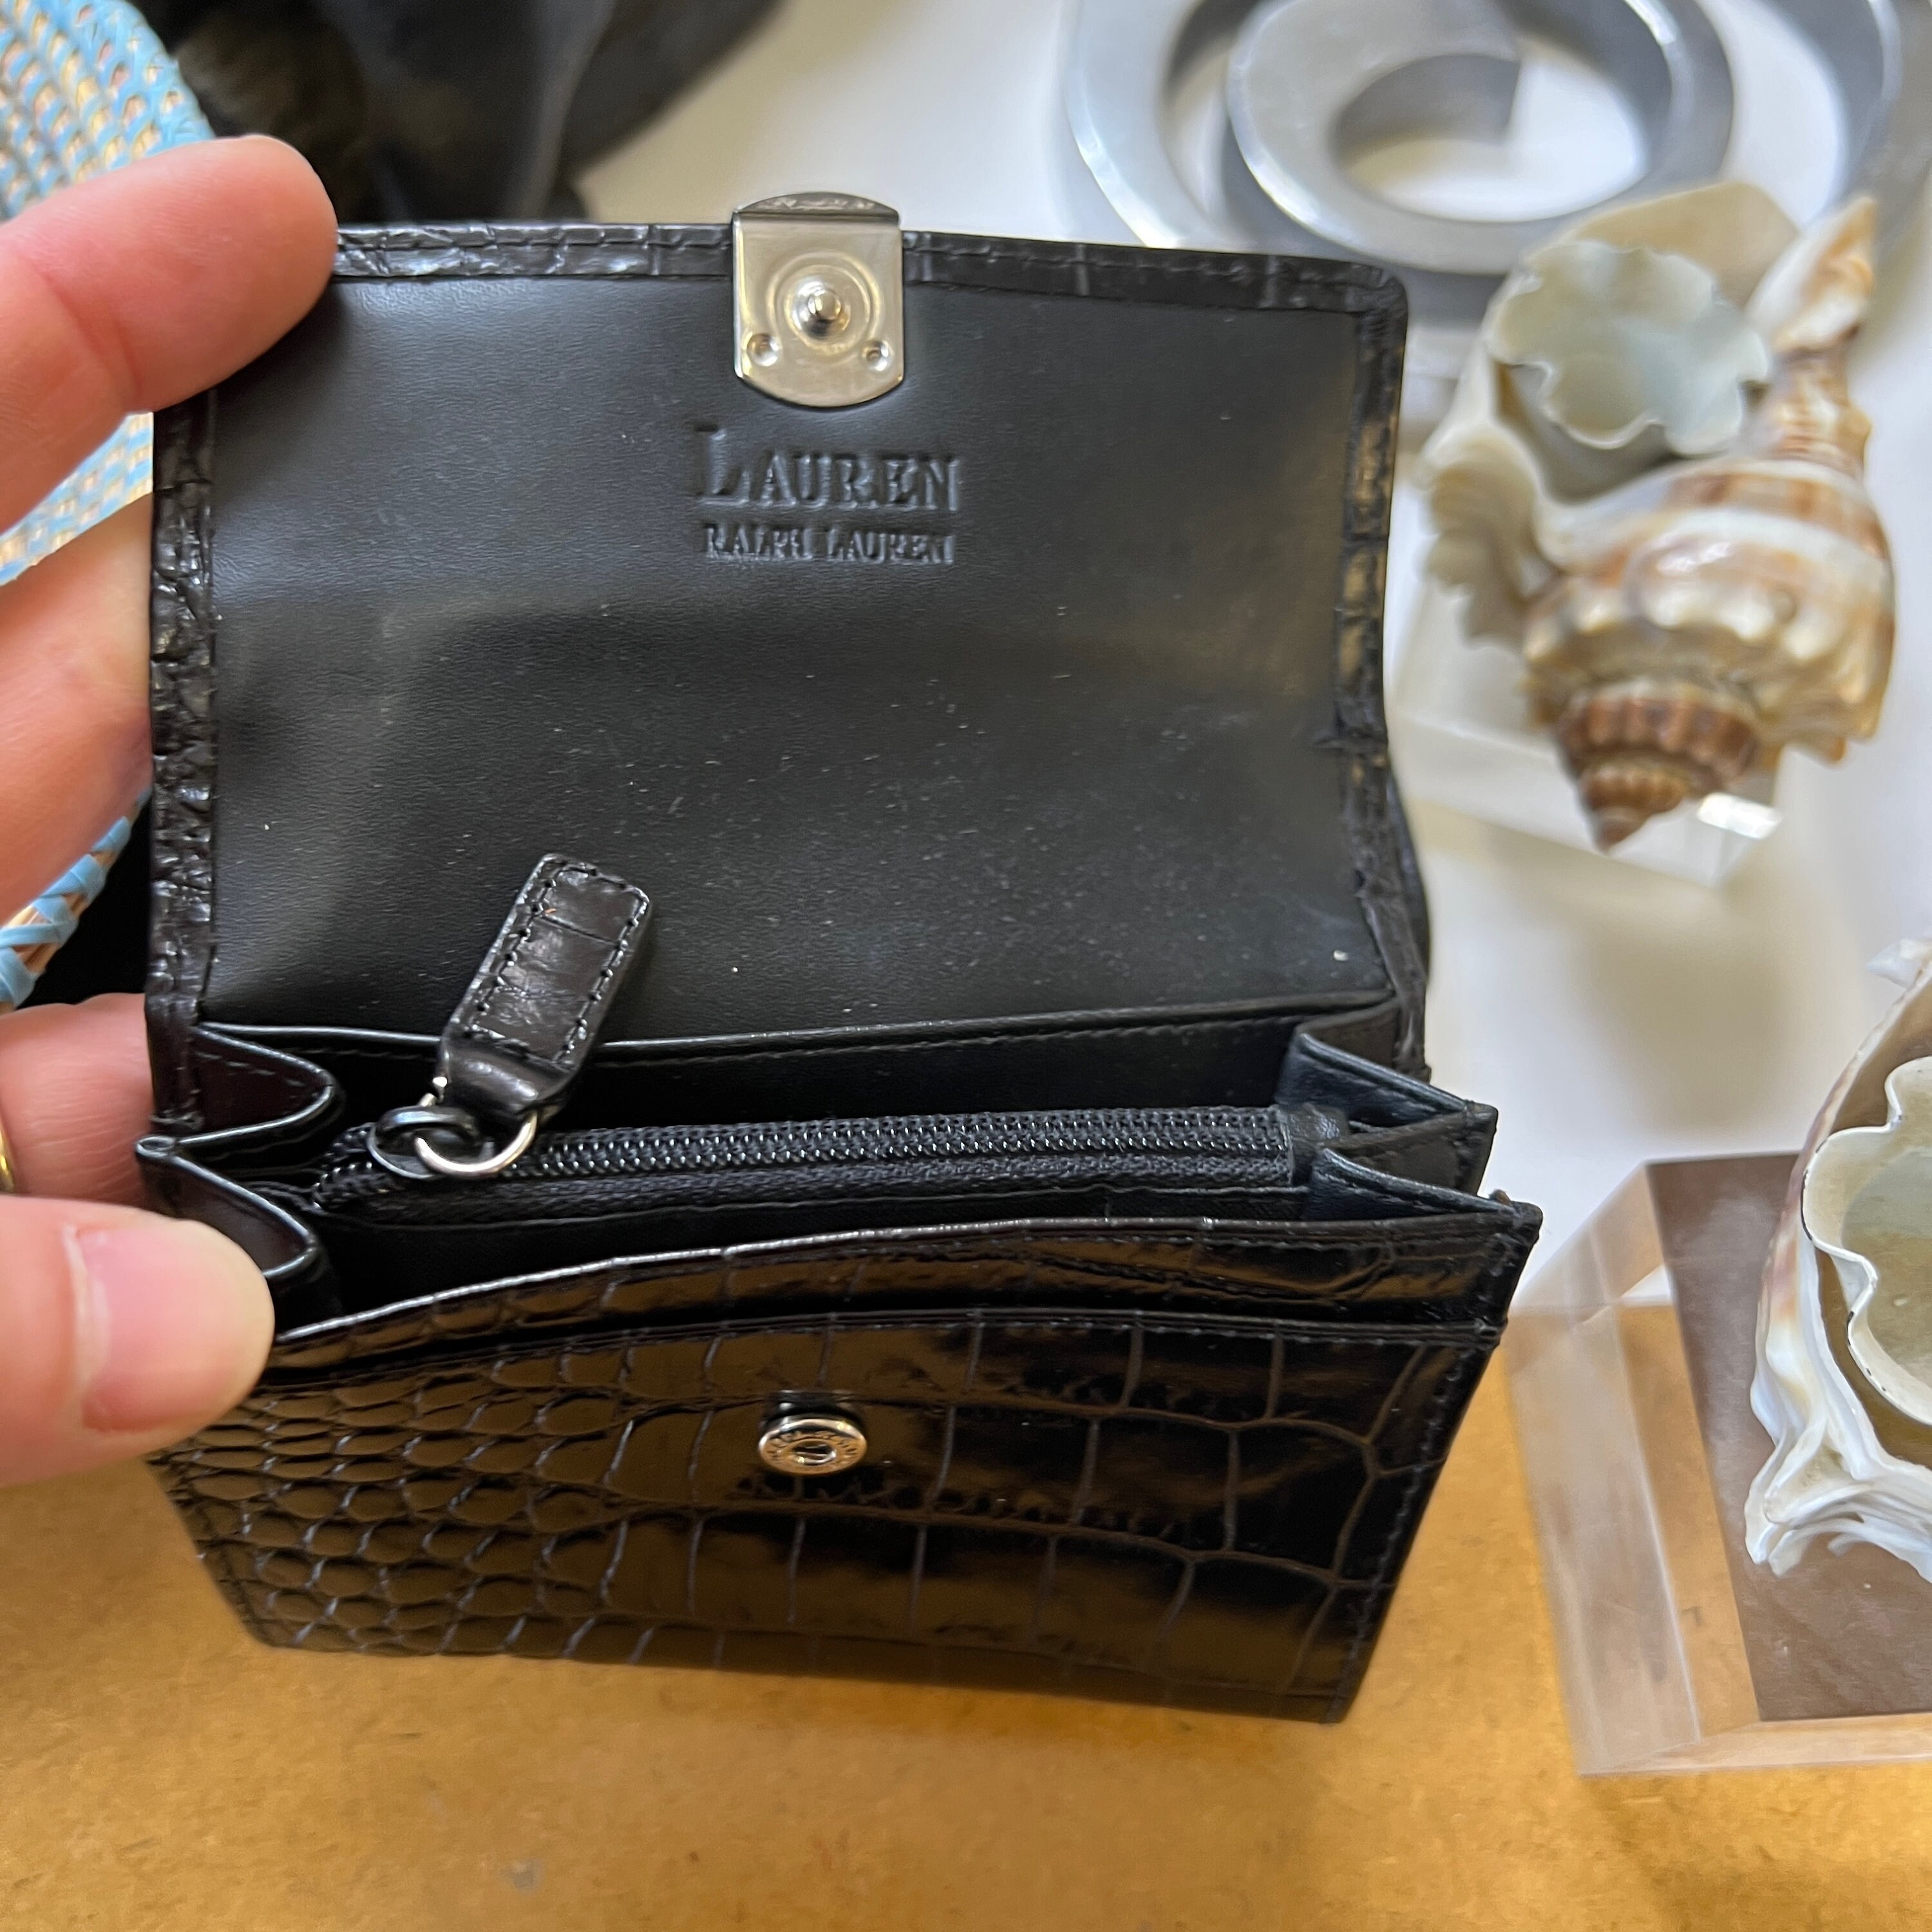 Small wallet « Platinum » - Alligator